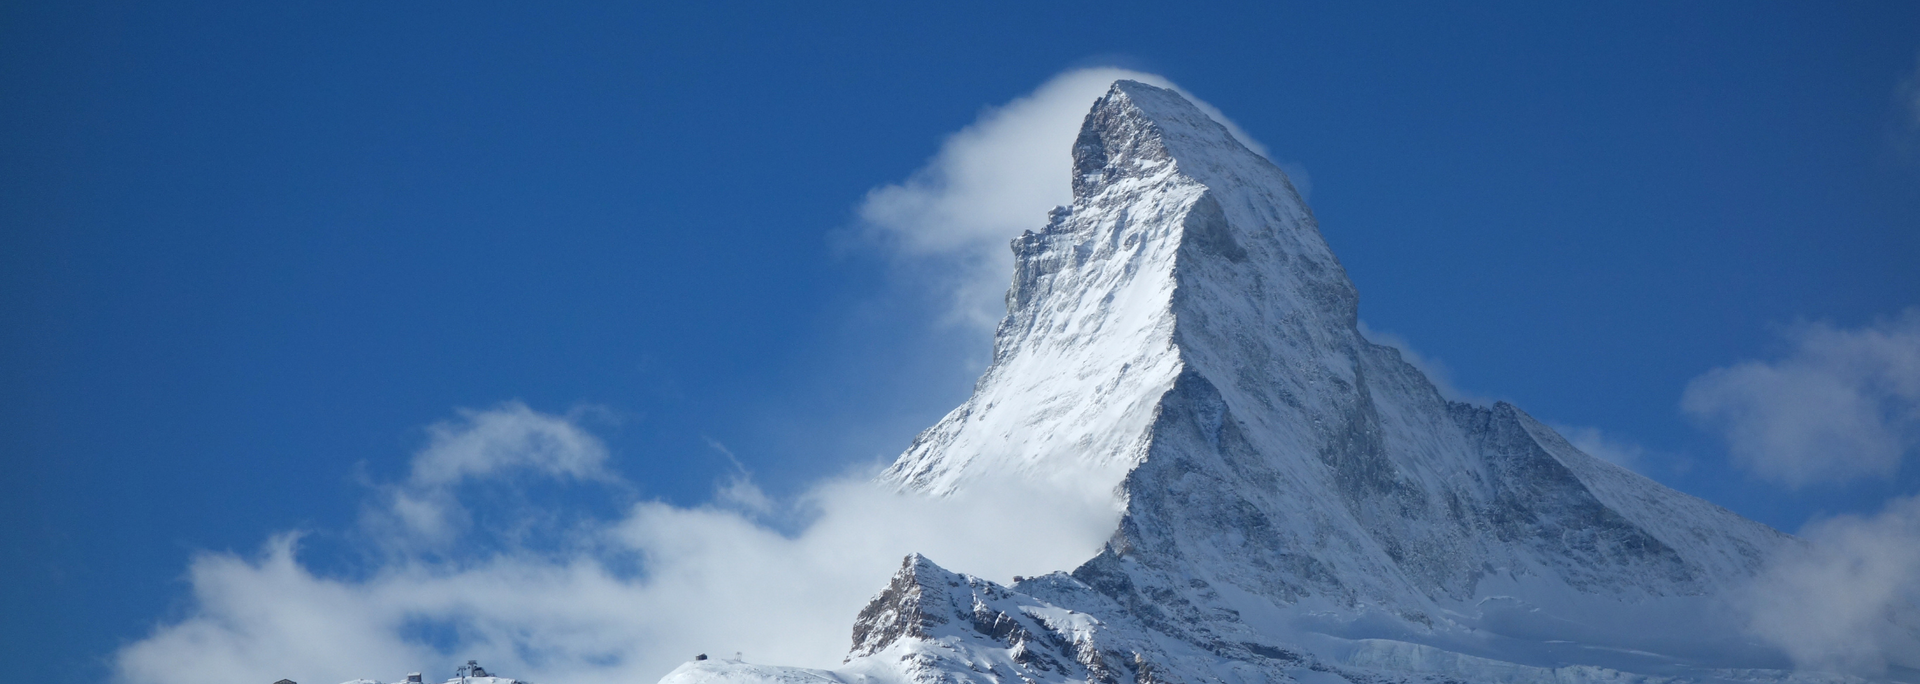 Picture of the Matterhorn